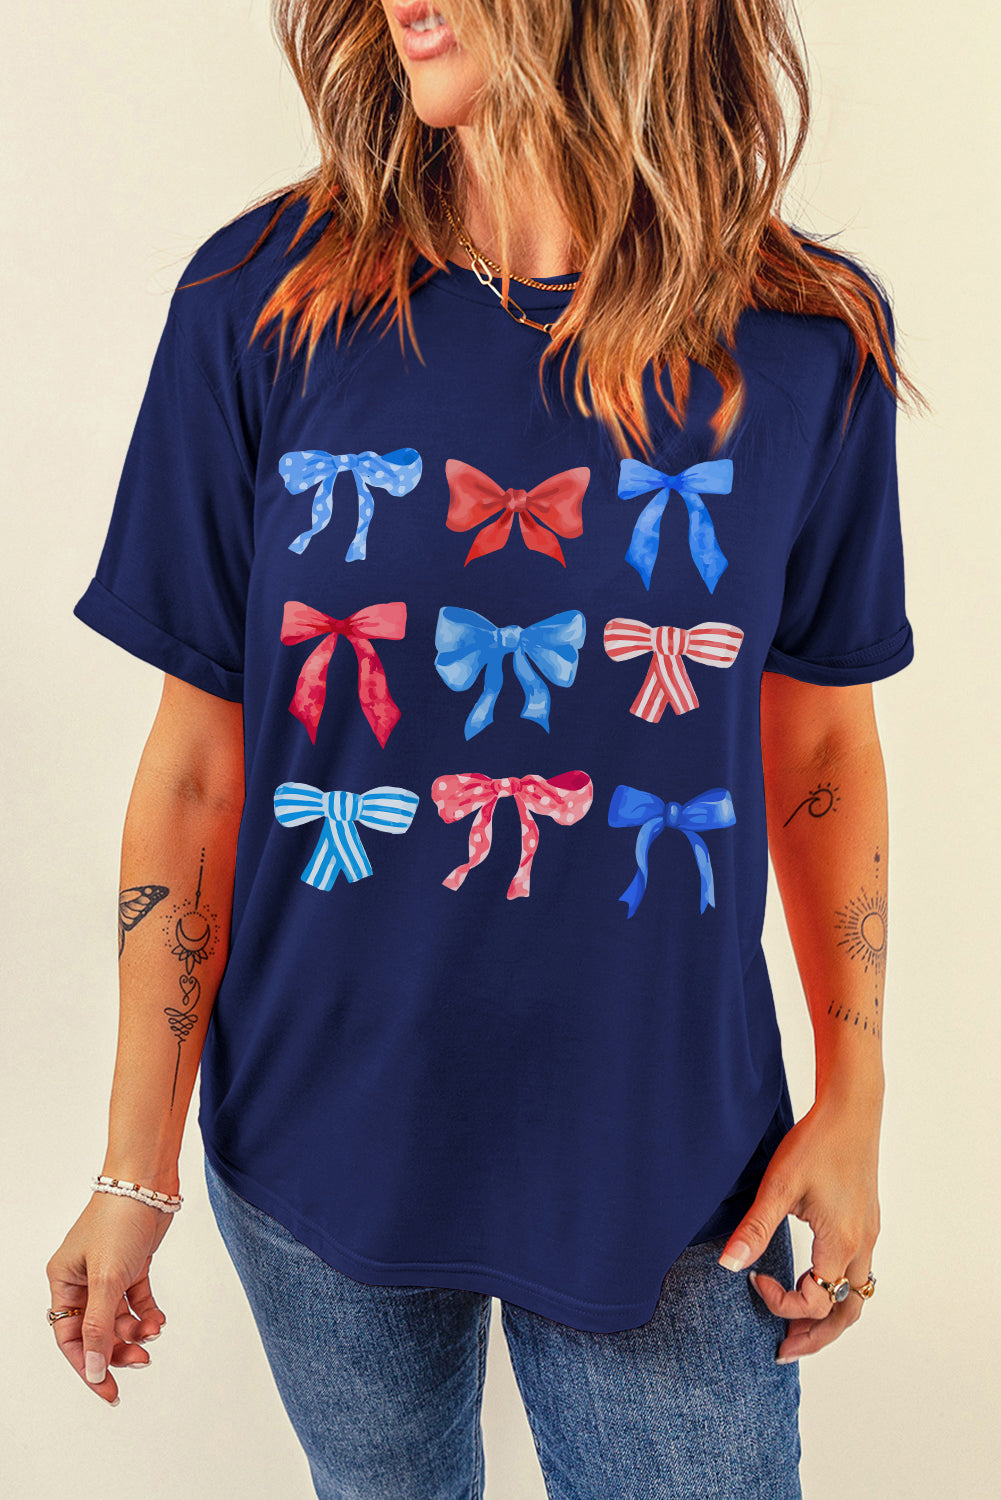 Patriotic Bow Graphic Women's Short Sleeve T-Shirt